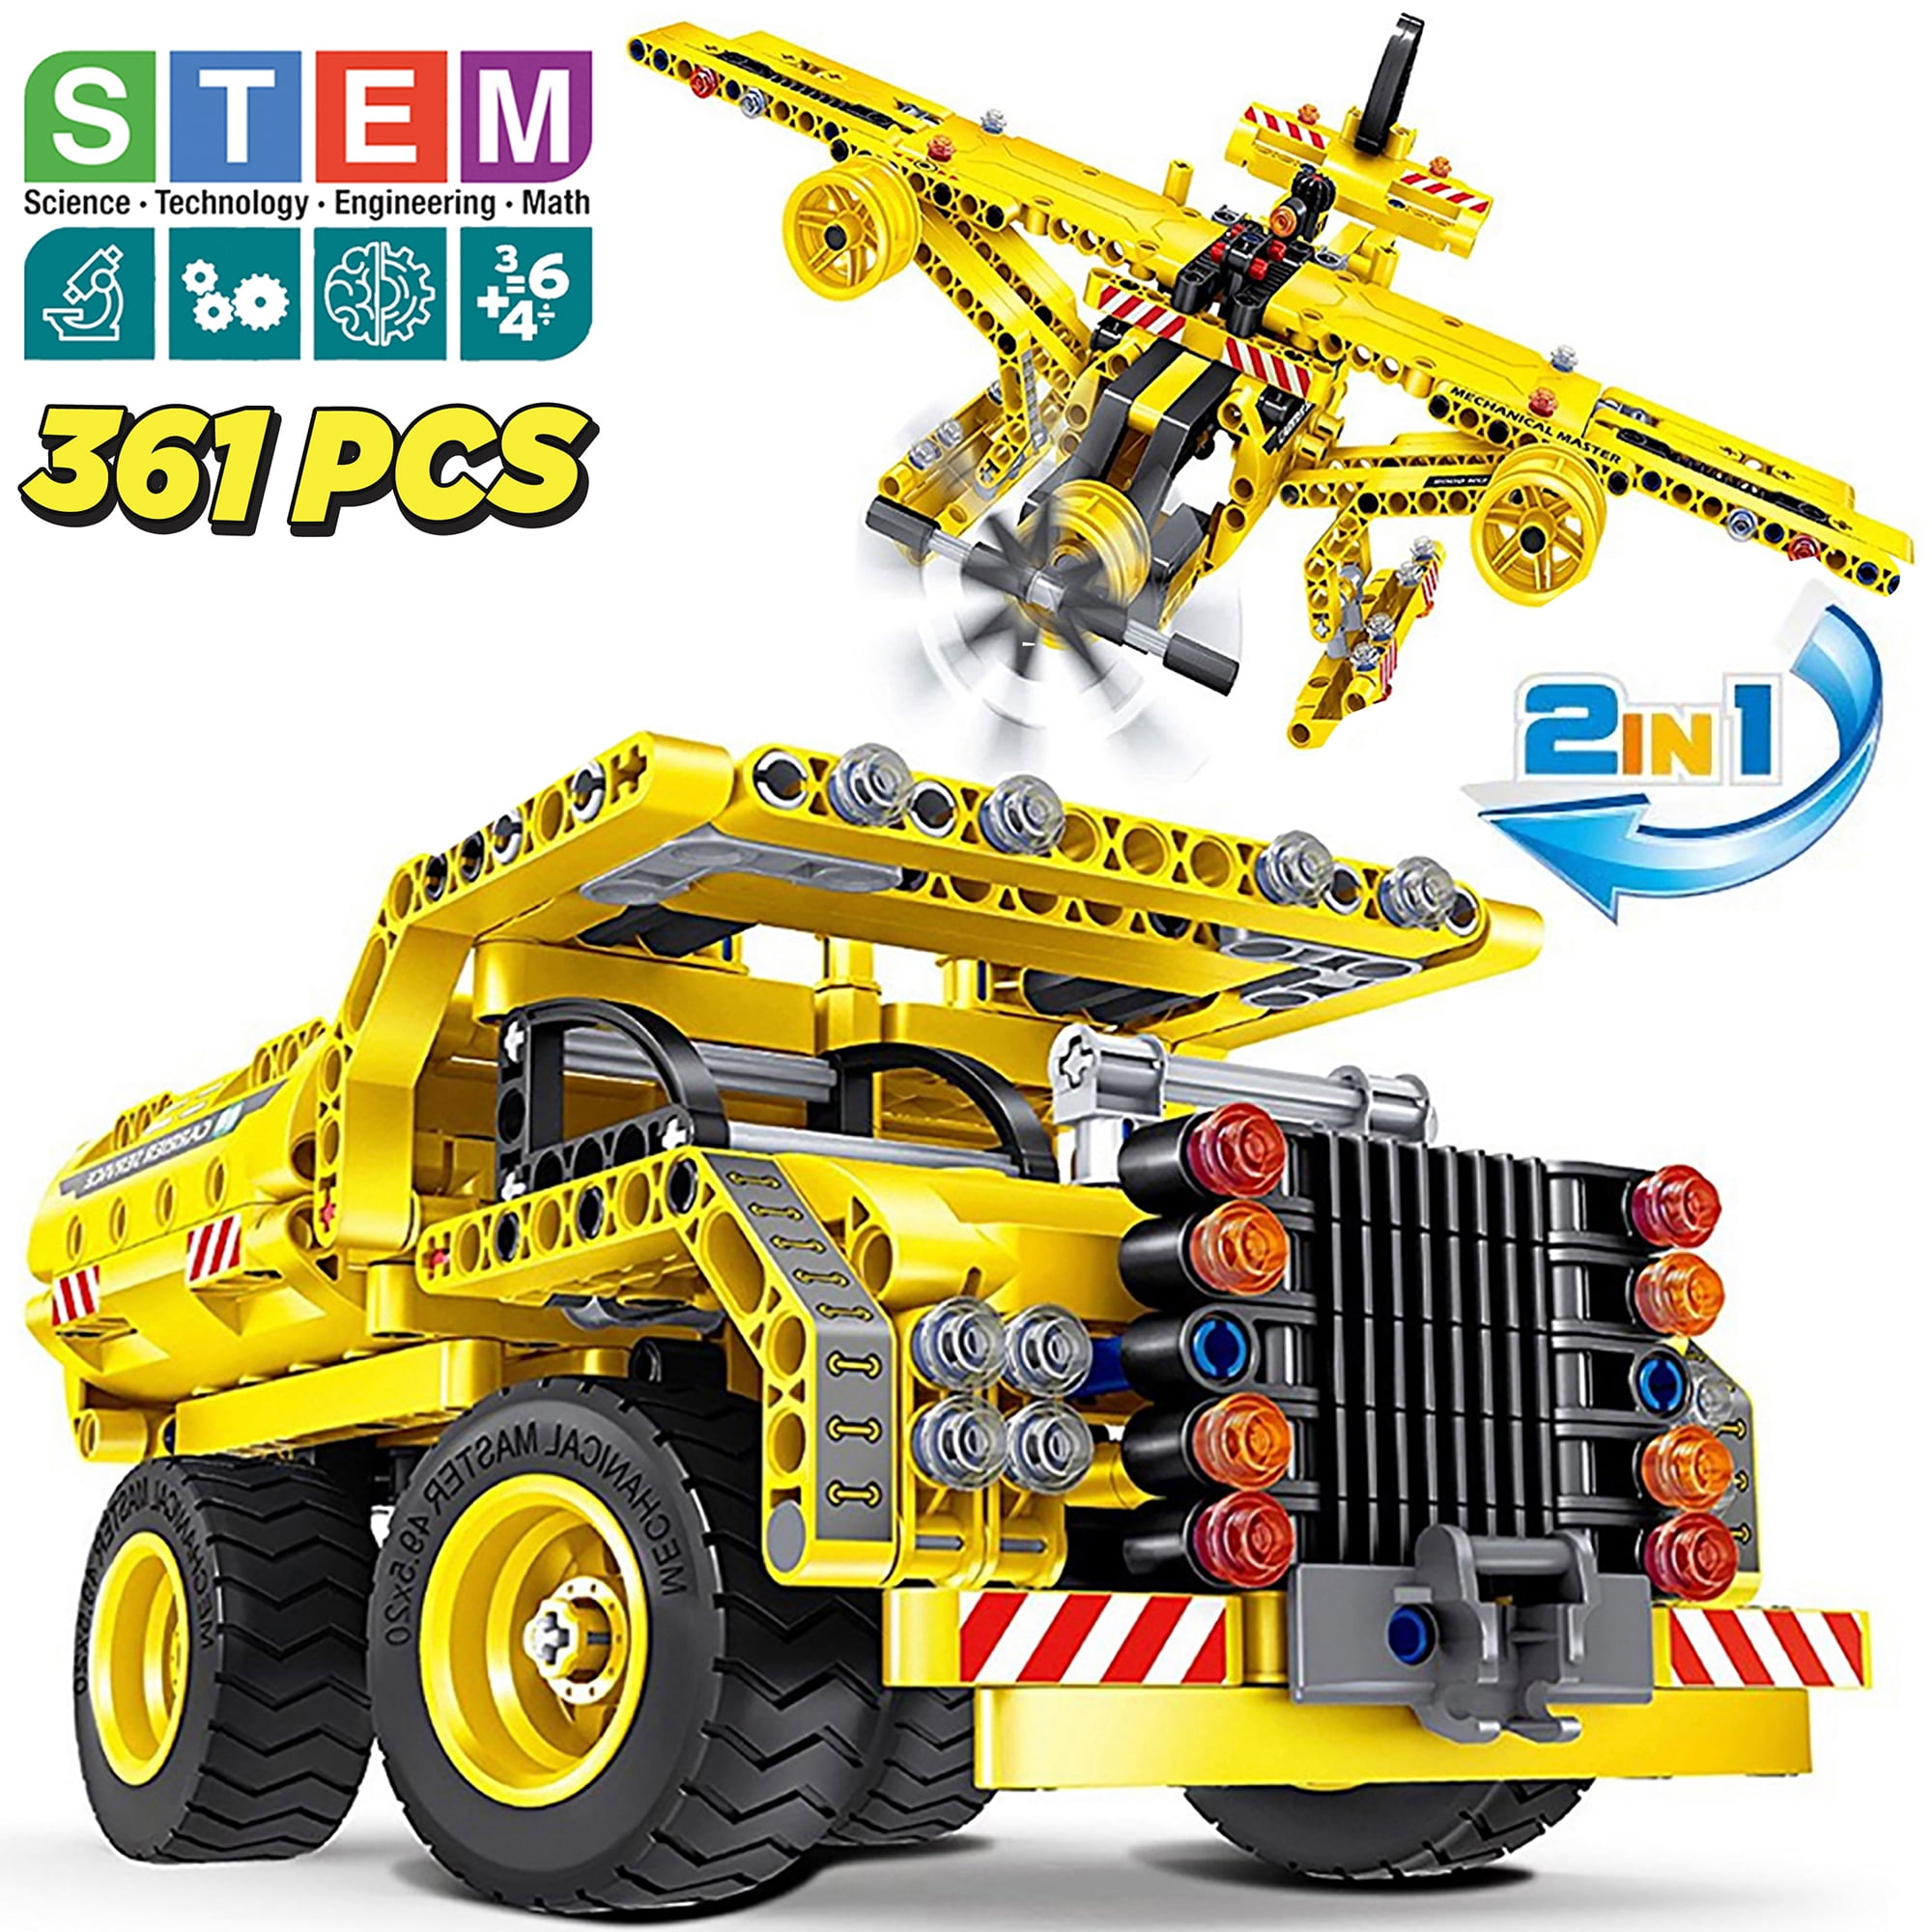 42147 Le Camion À Benne Basculante Lego® Technic - N/A - Kiabi